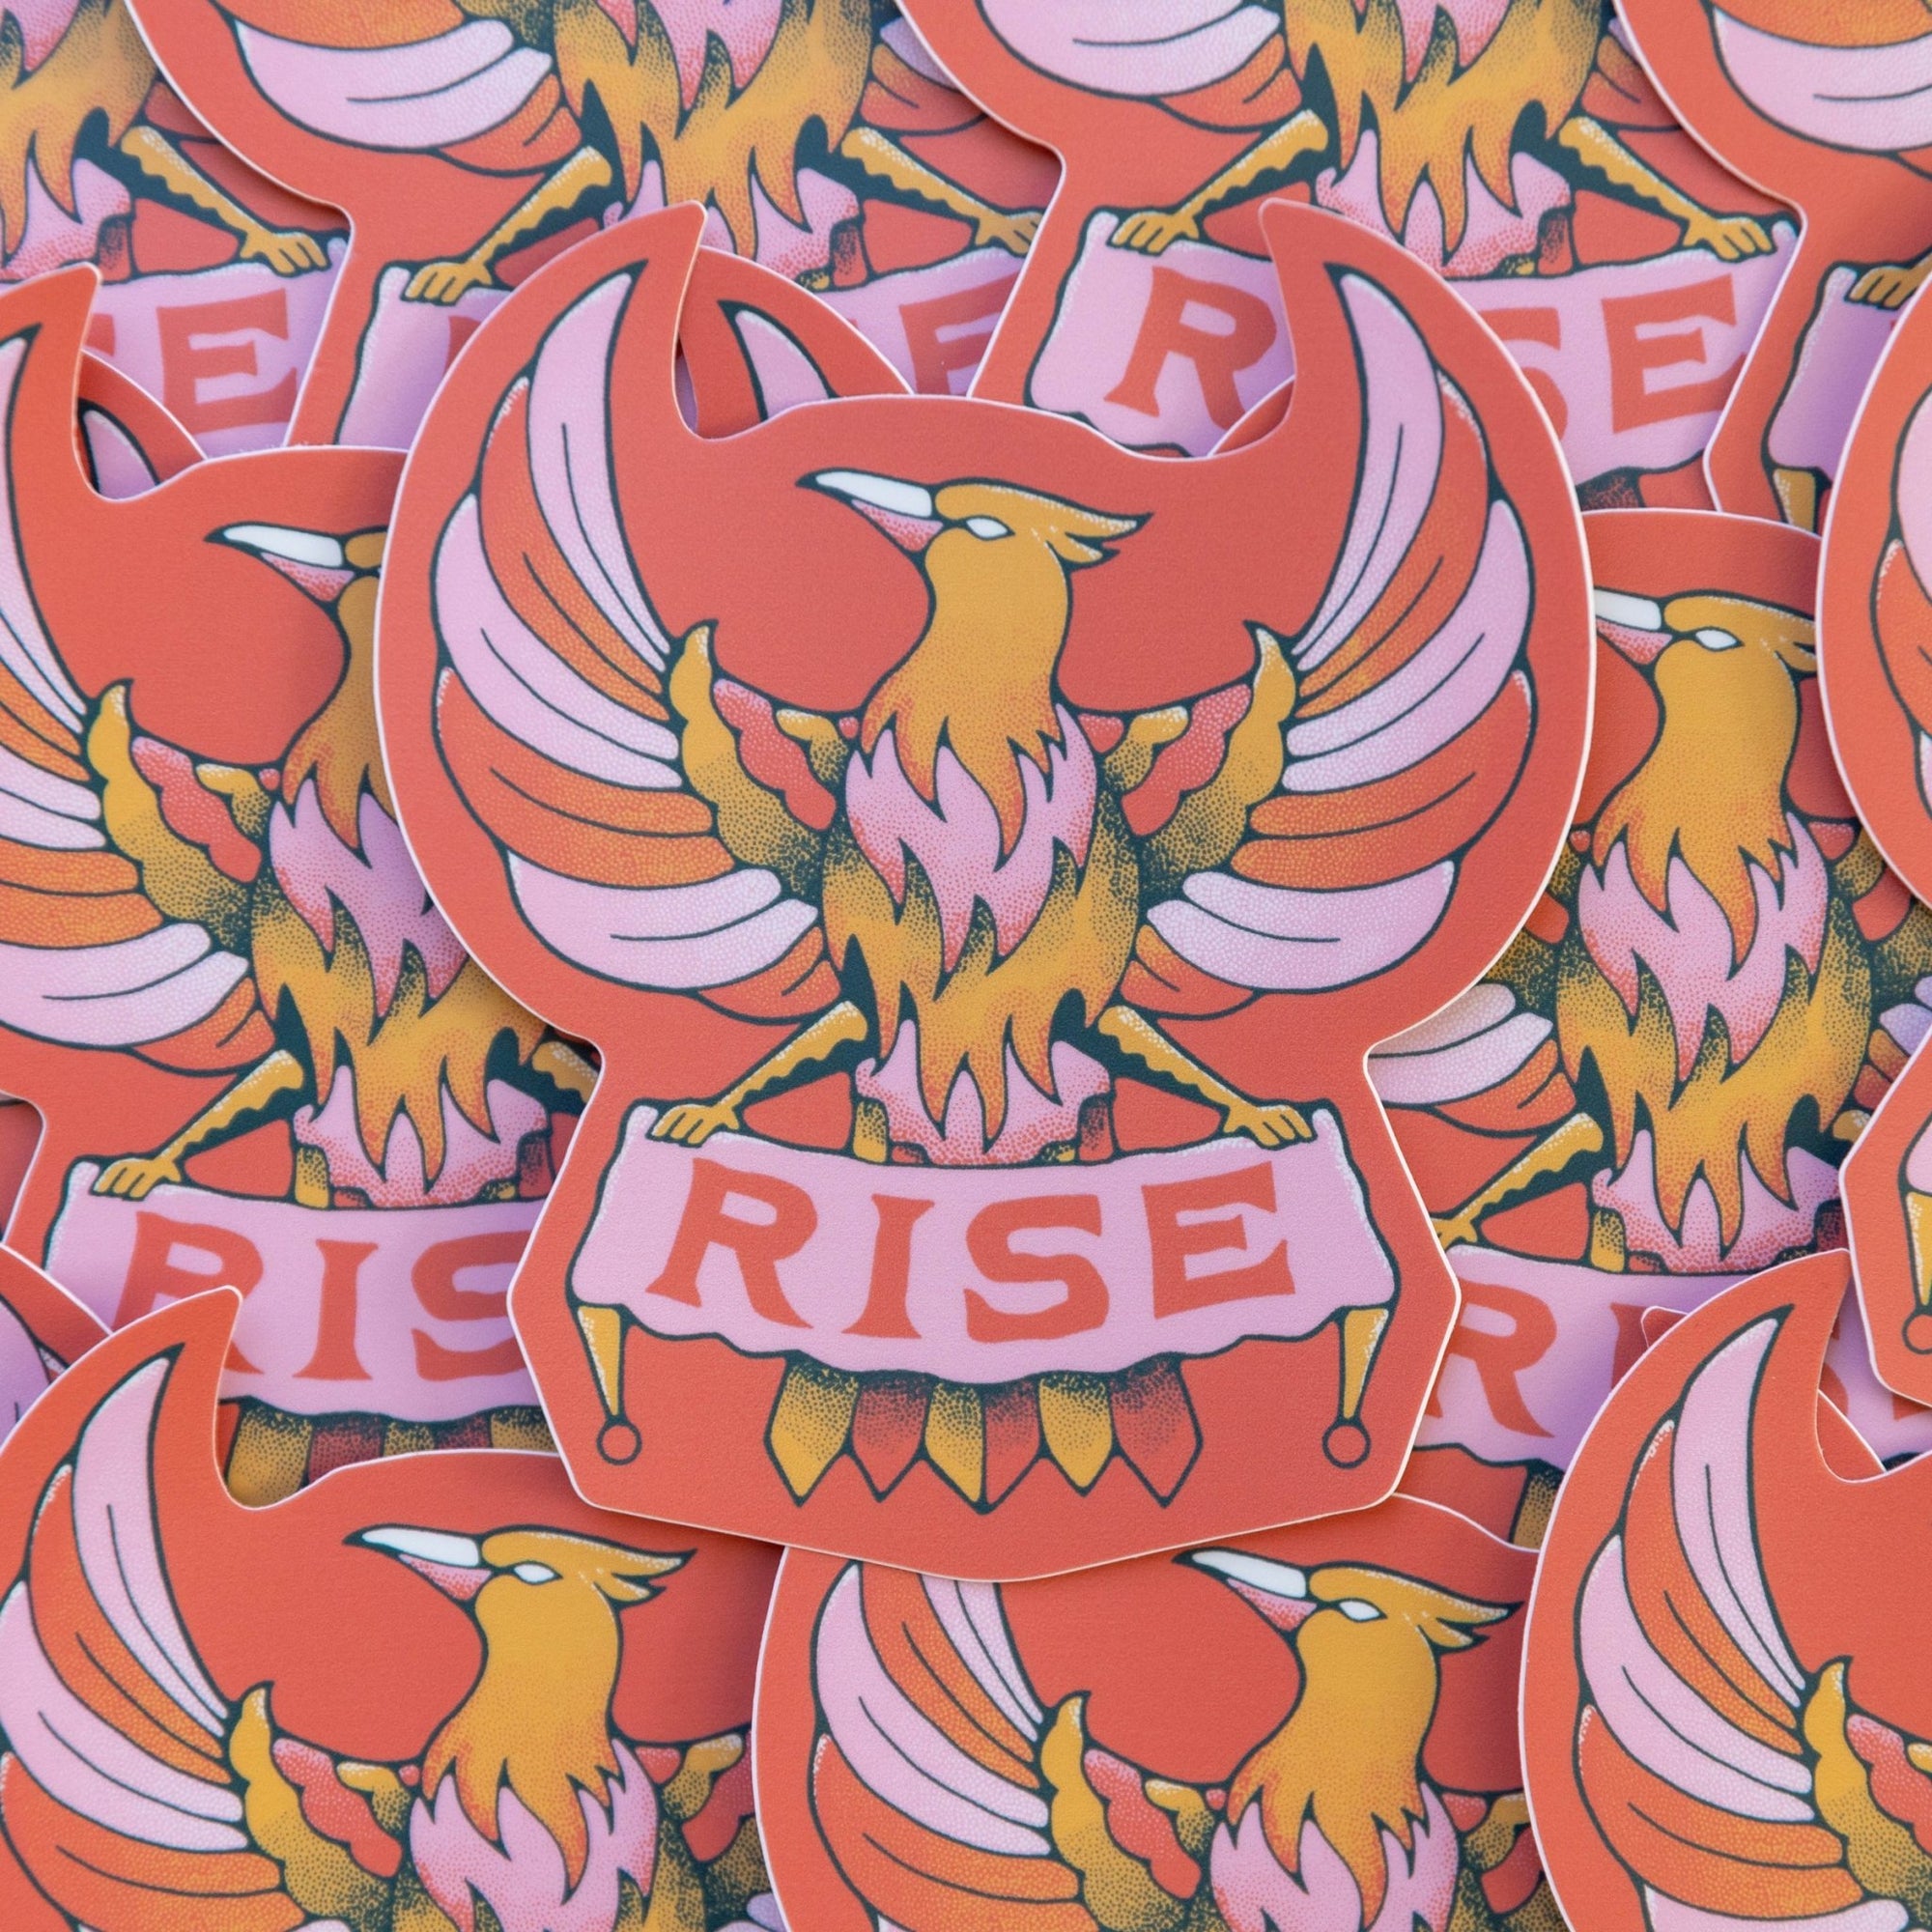 Rise Phoenix (The Sign) - menottees